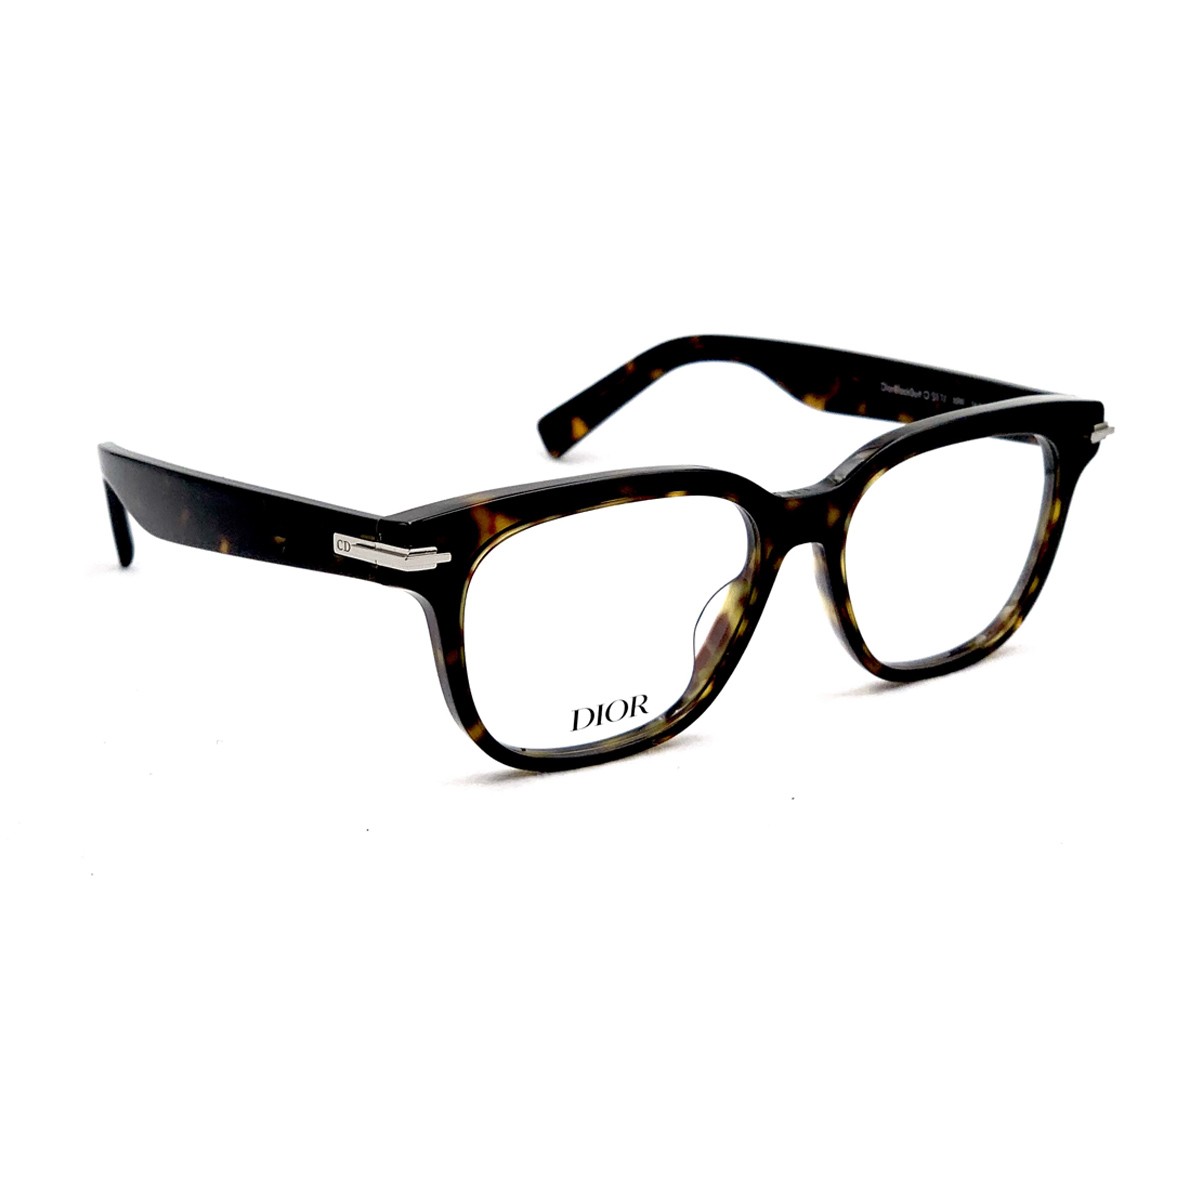 15 Men Prescription Eyewear Frames ideas  eyewear frames prescription  eyewear eyewear